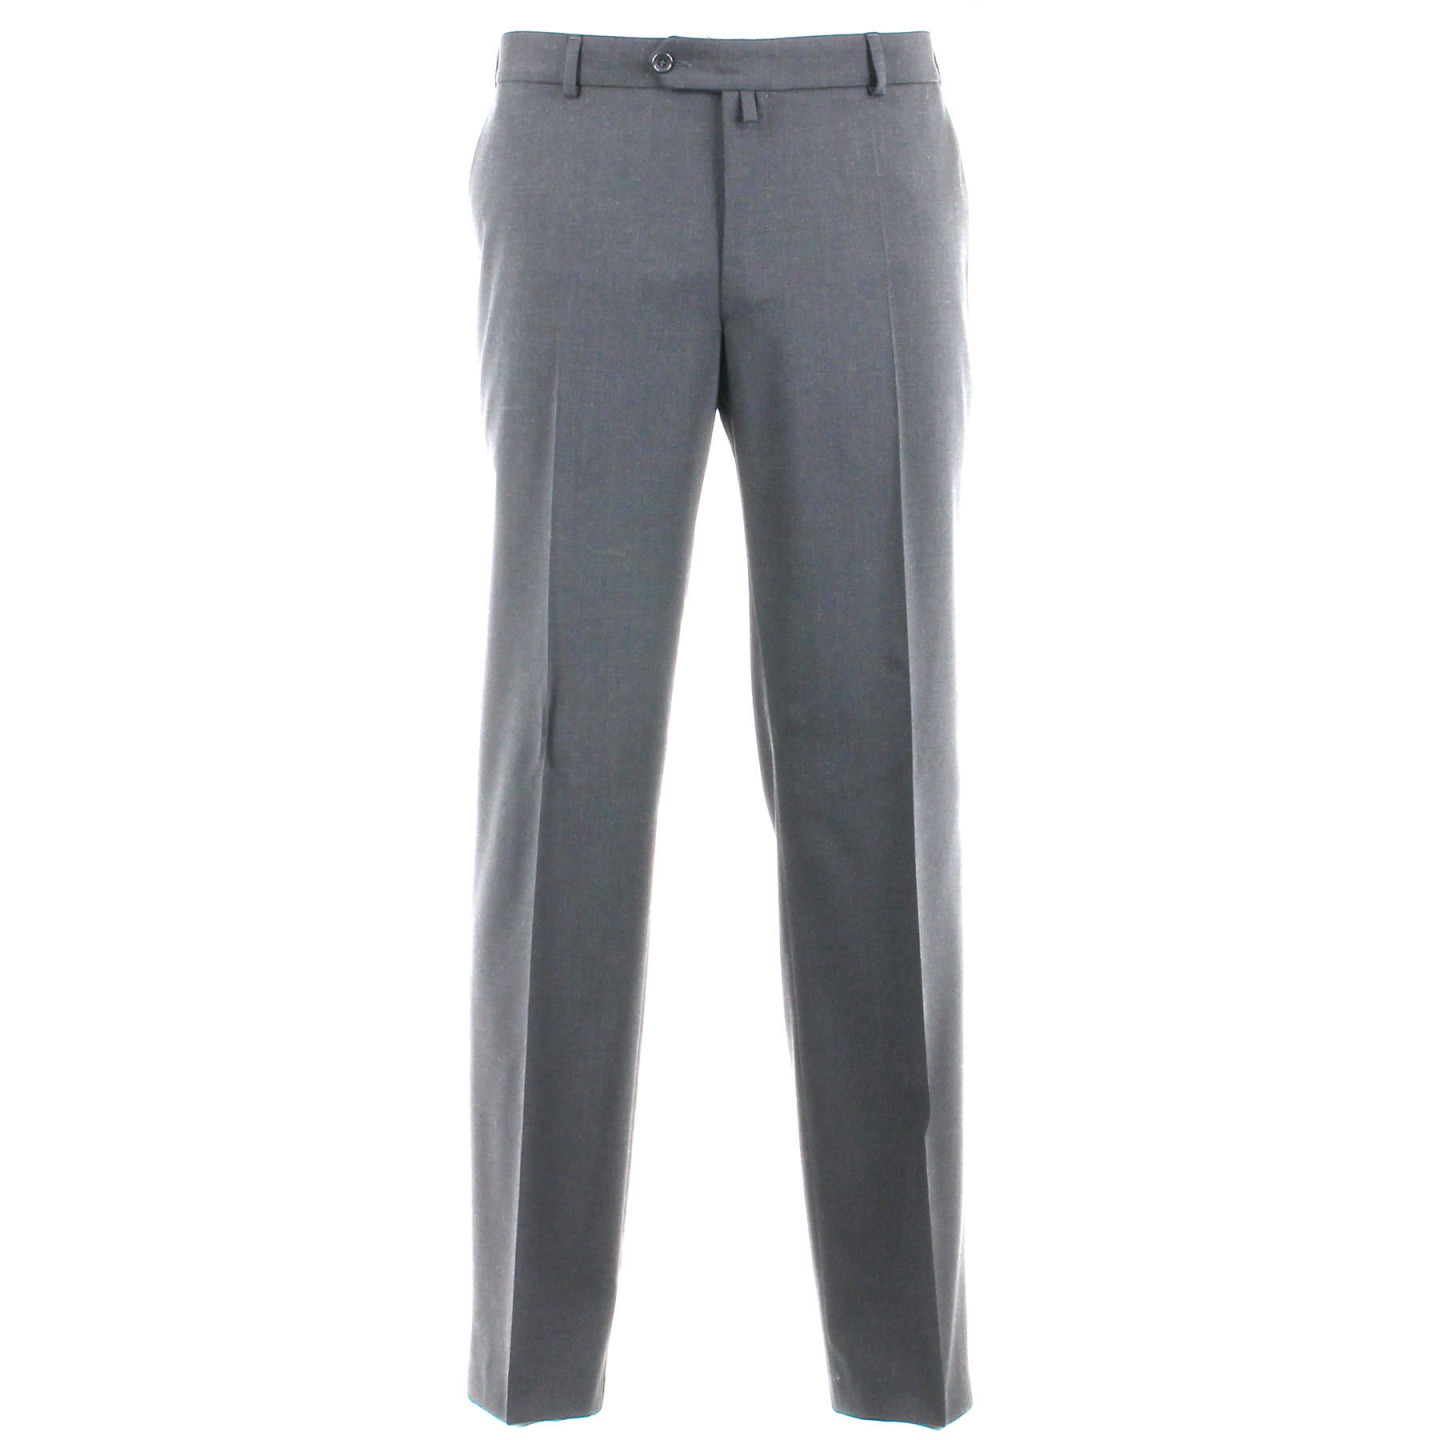 https://www.hommefort.fr/3761-product_hd/pantalon-de-costume-gris-chine.jpg